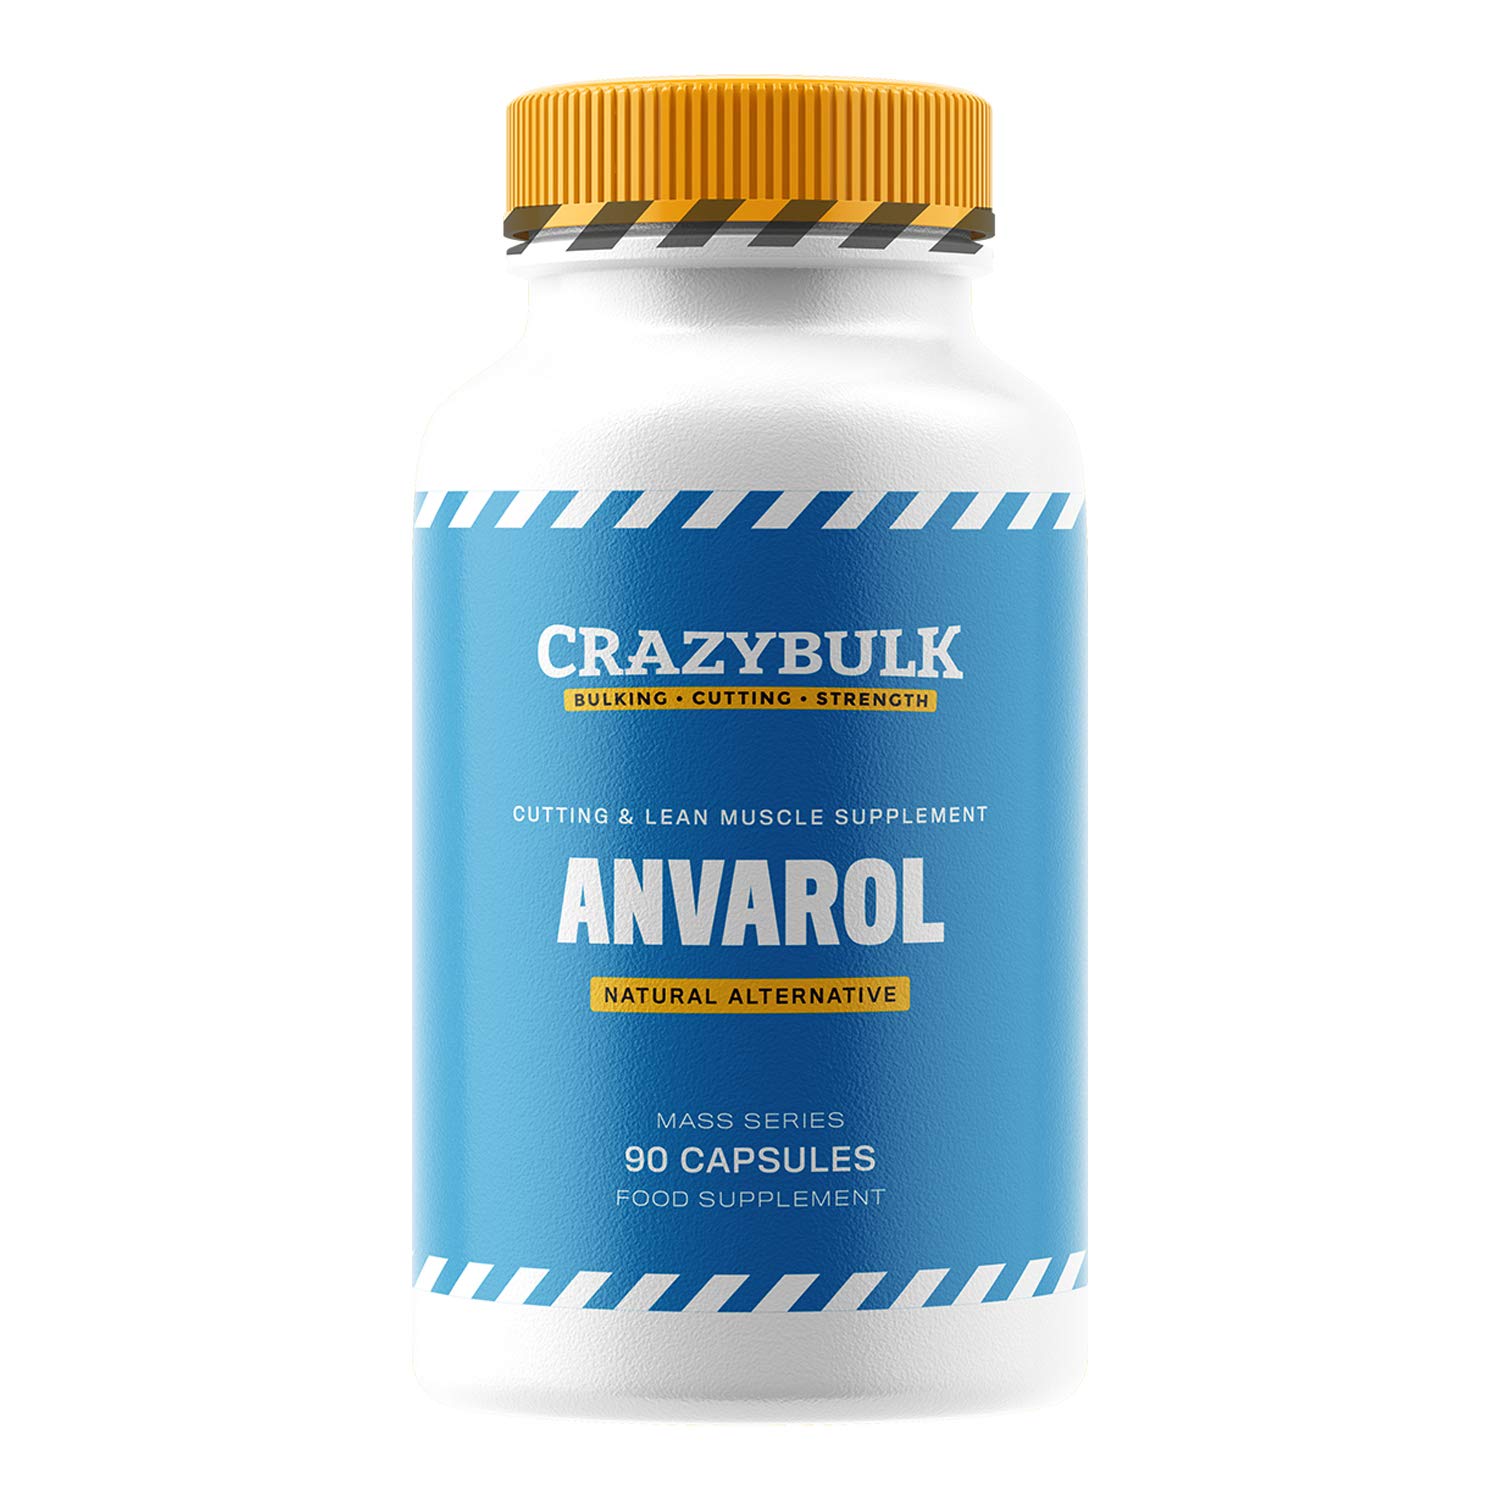 avarol - Do Anavar make you stronger?